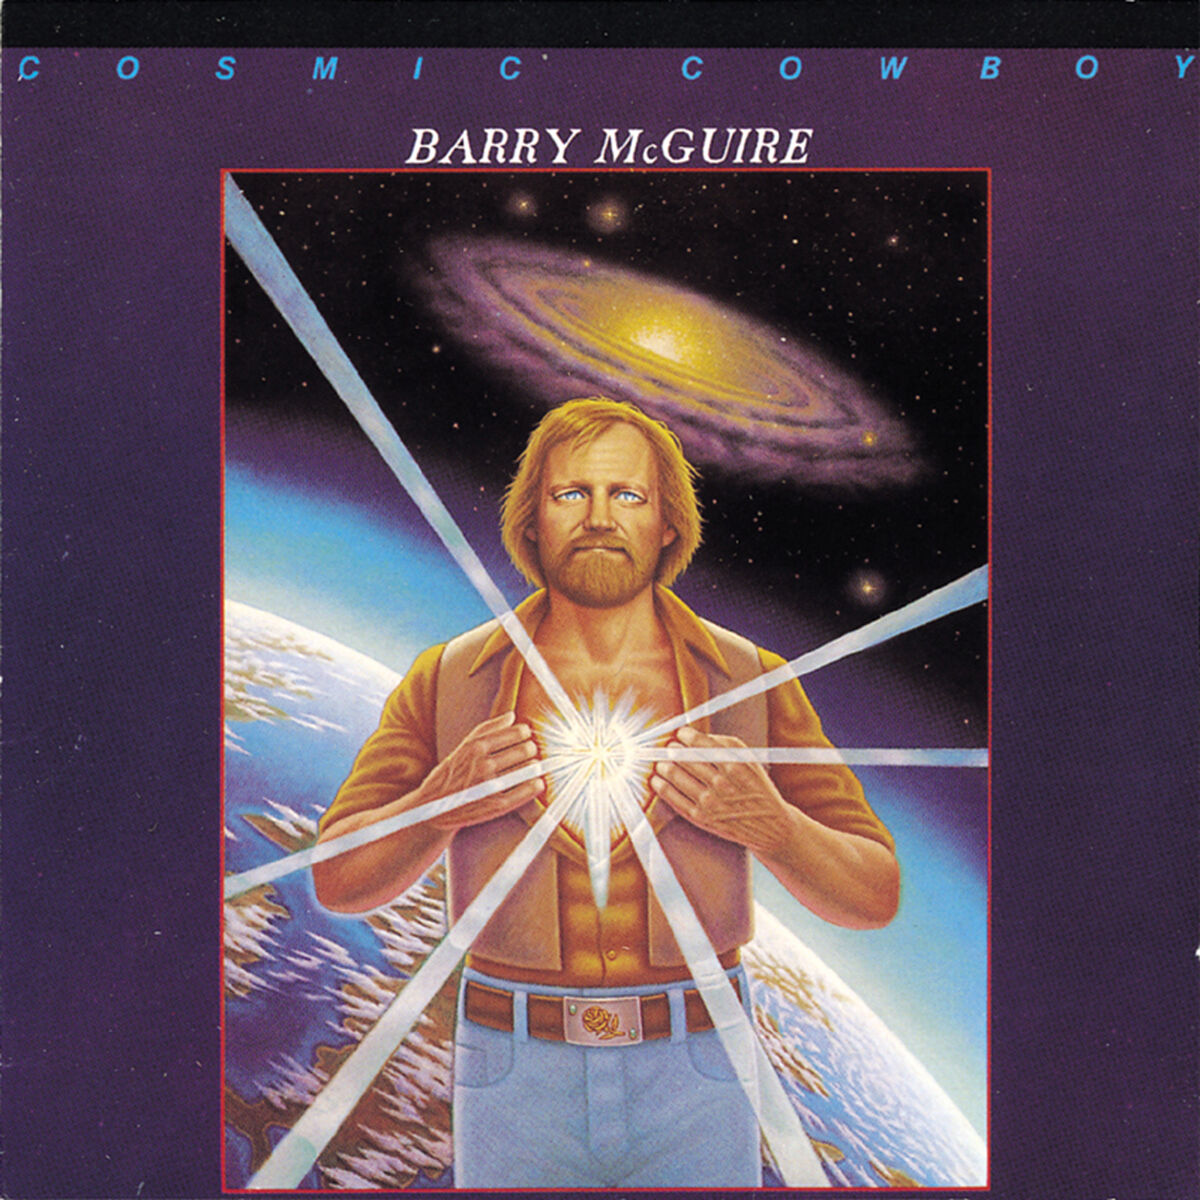 Barry McGuire: albums